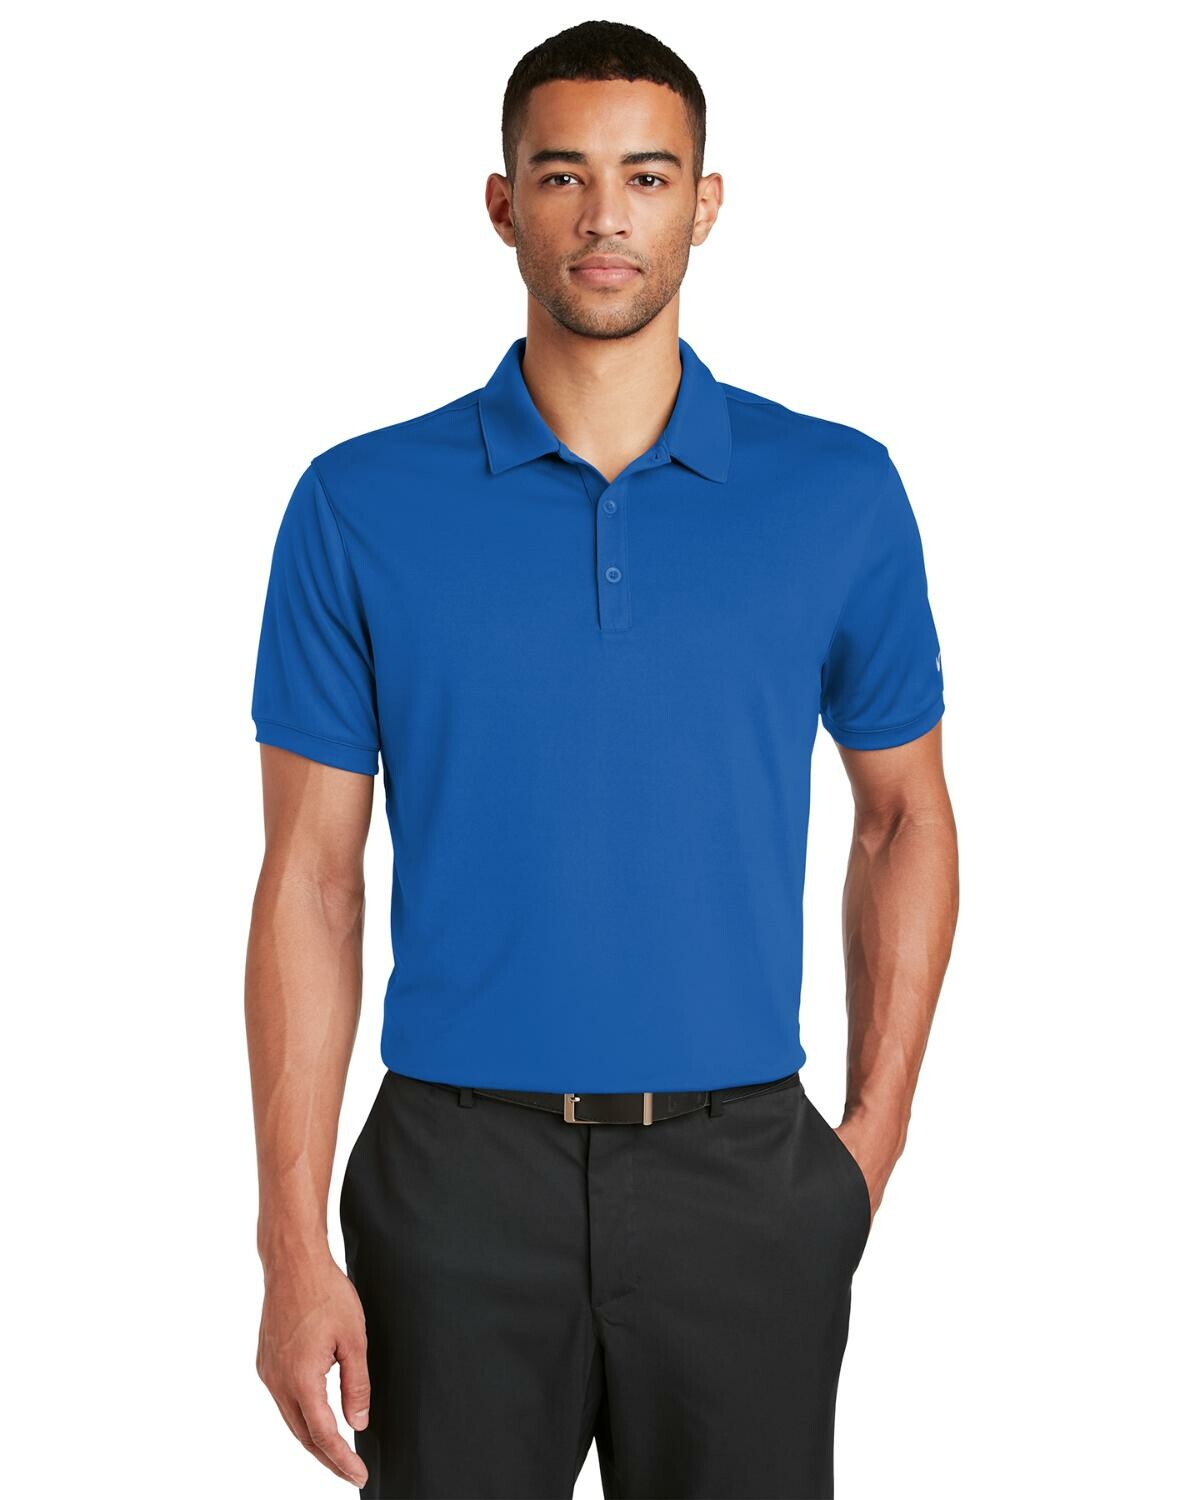 Nike Golf 799802 Mens Dri-FIT Performance Polo Shirt | Wholesale Promotional Apparel